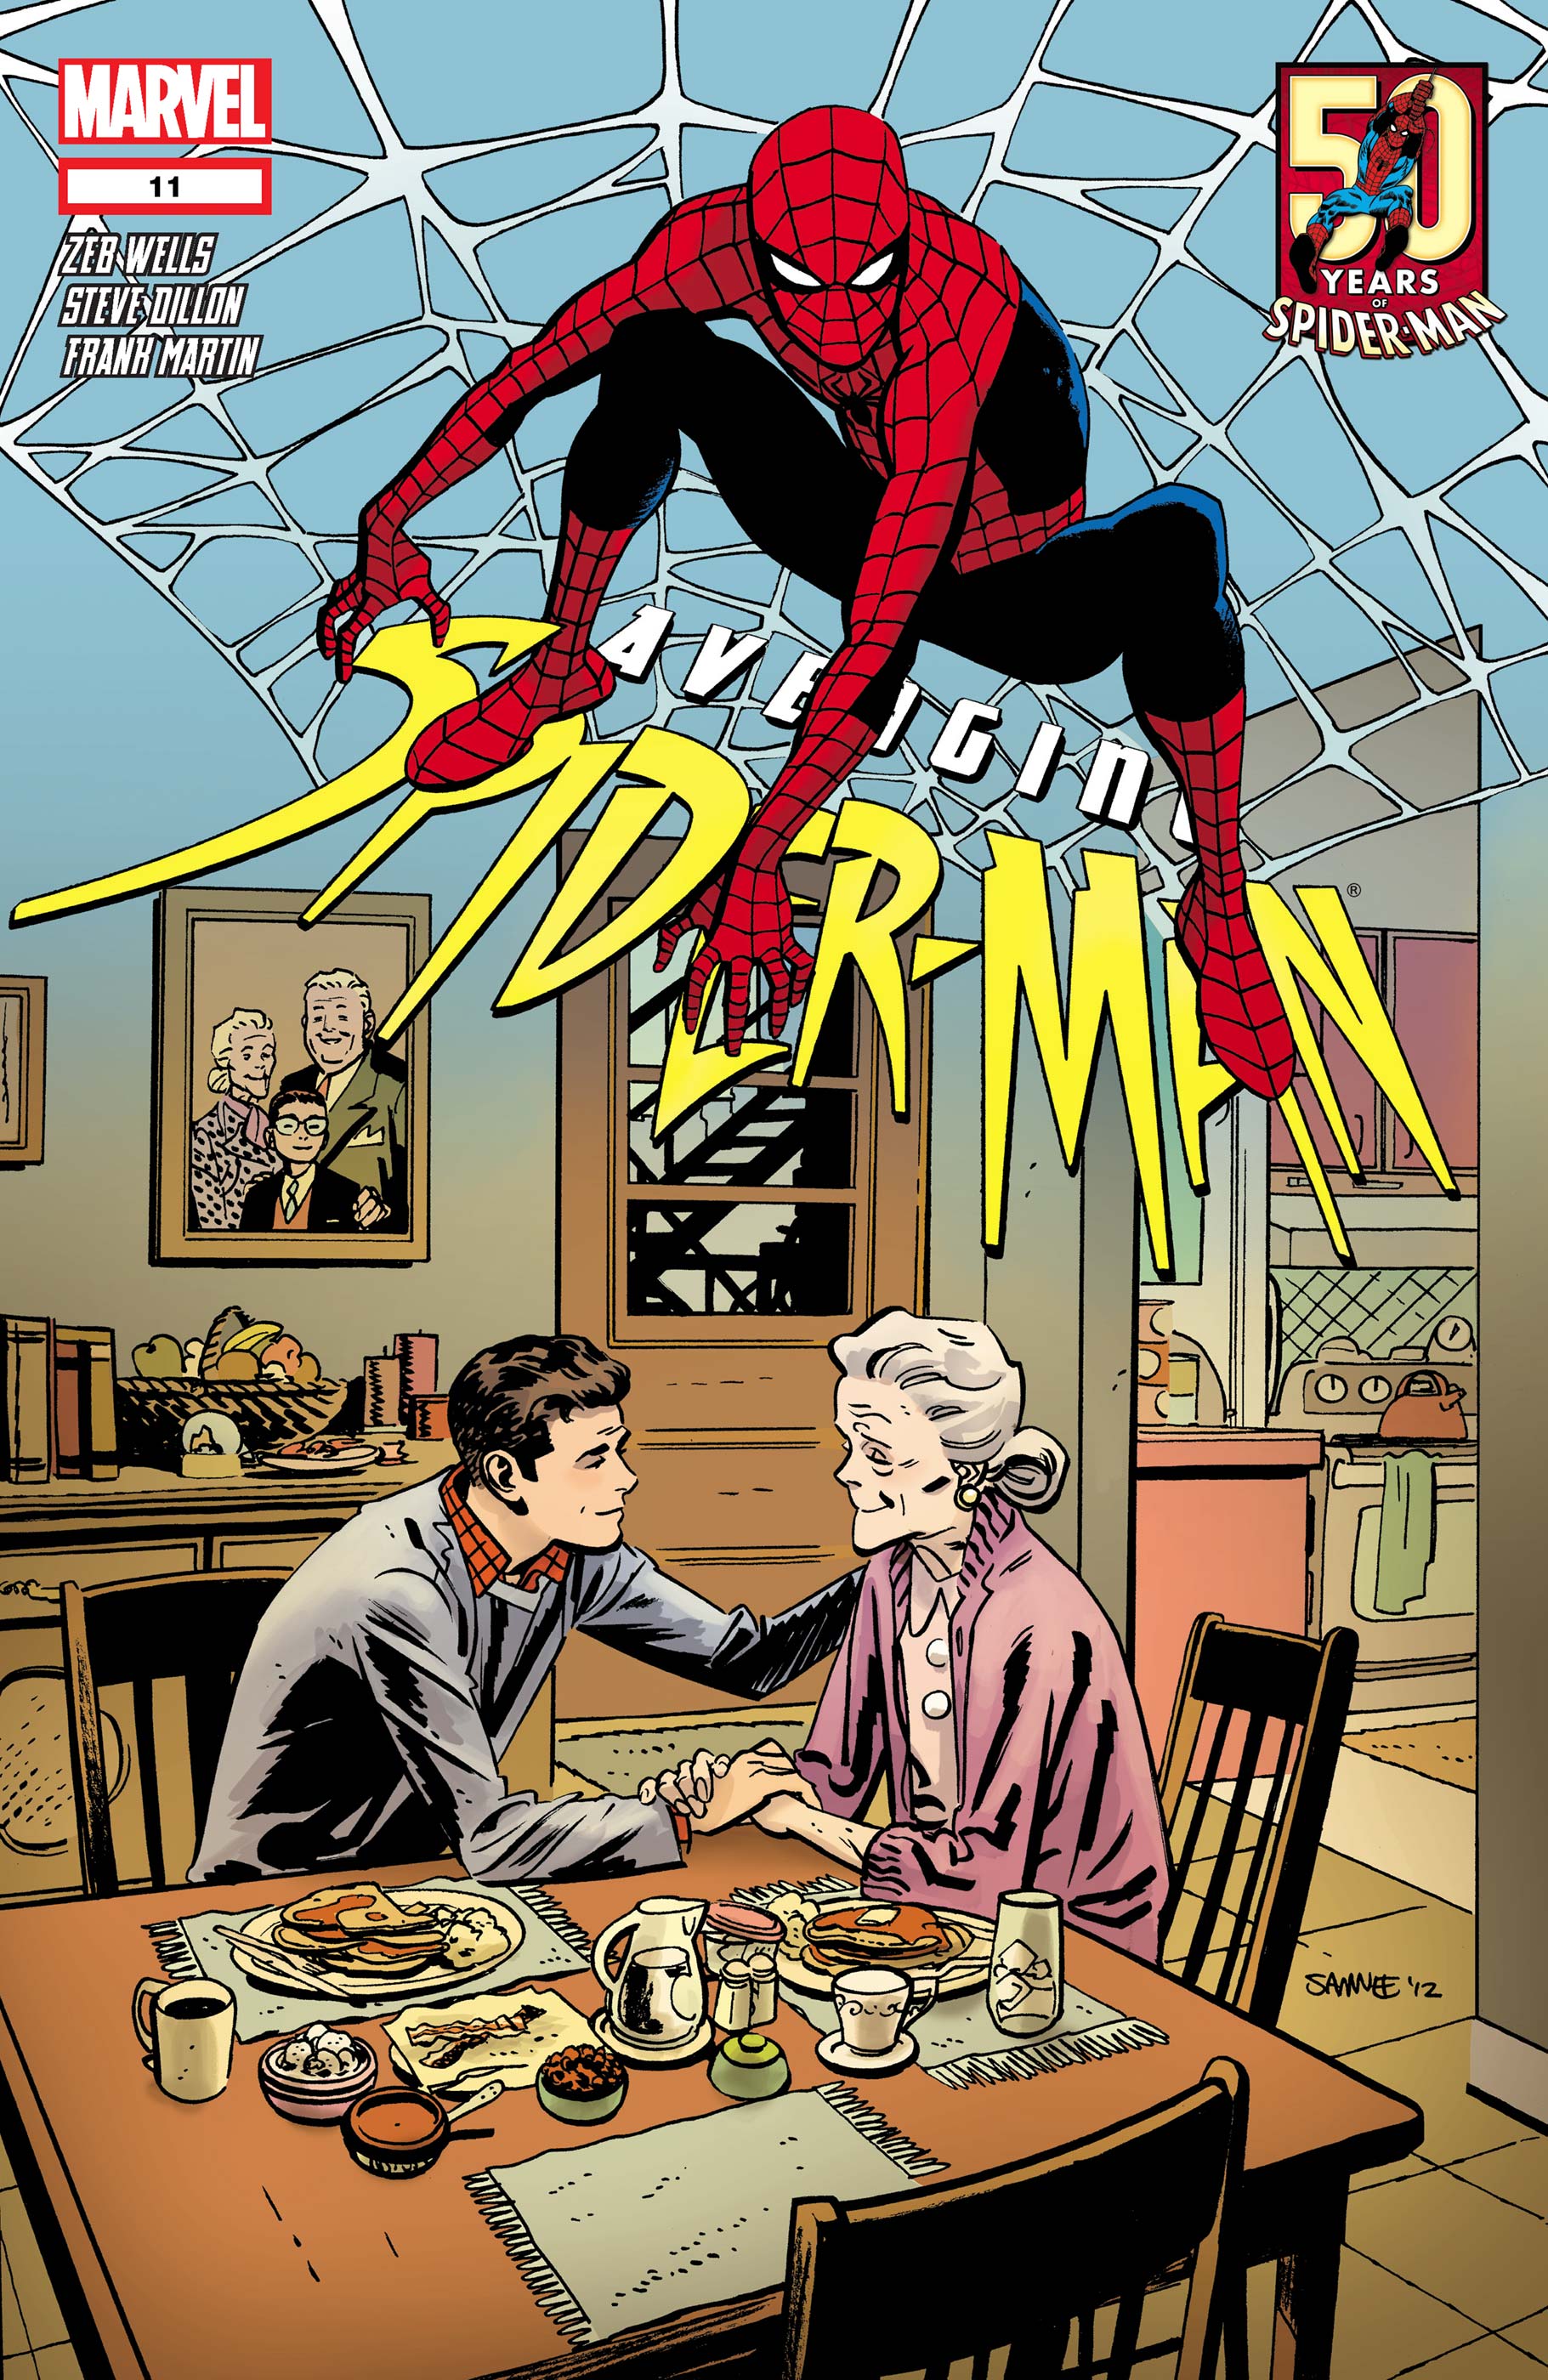 Avenging Spider-Man (2011) #11